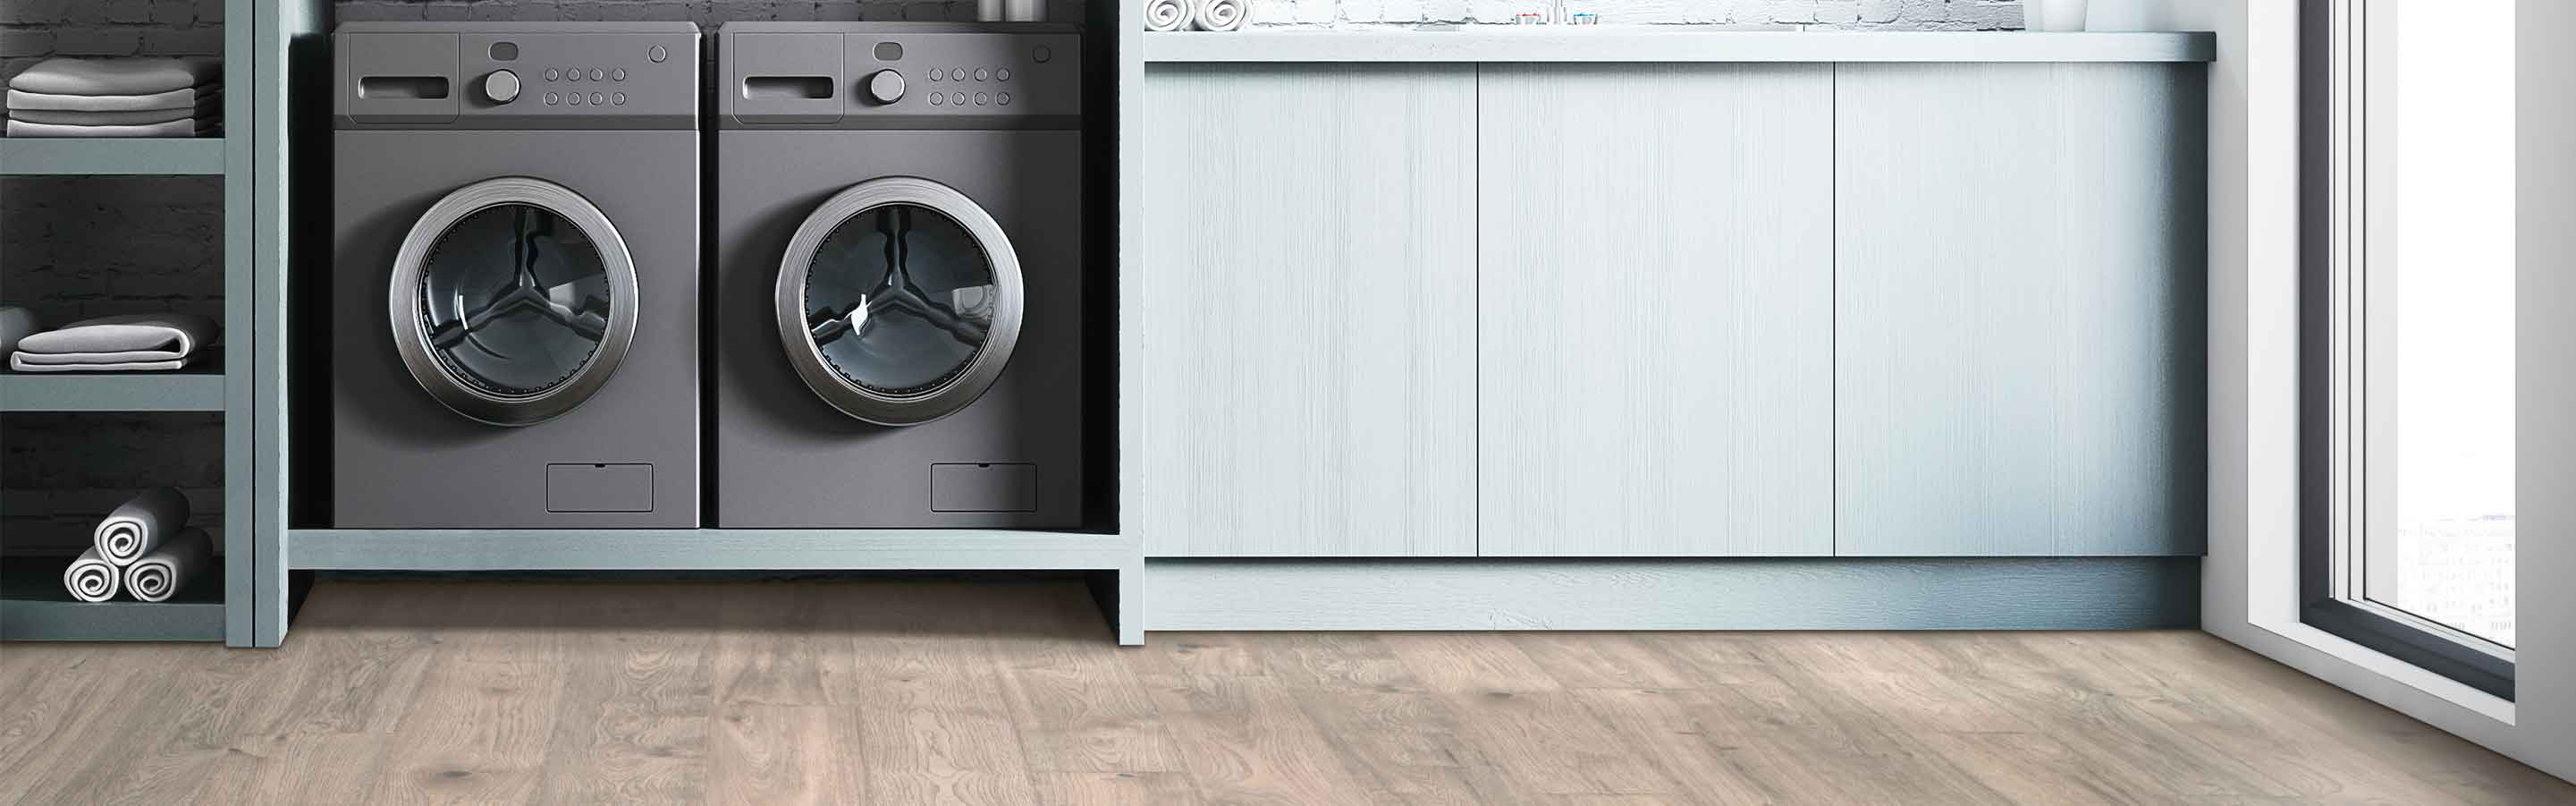 Laminate floor in the laundry room, black appliances. 